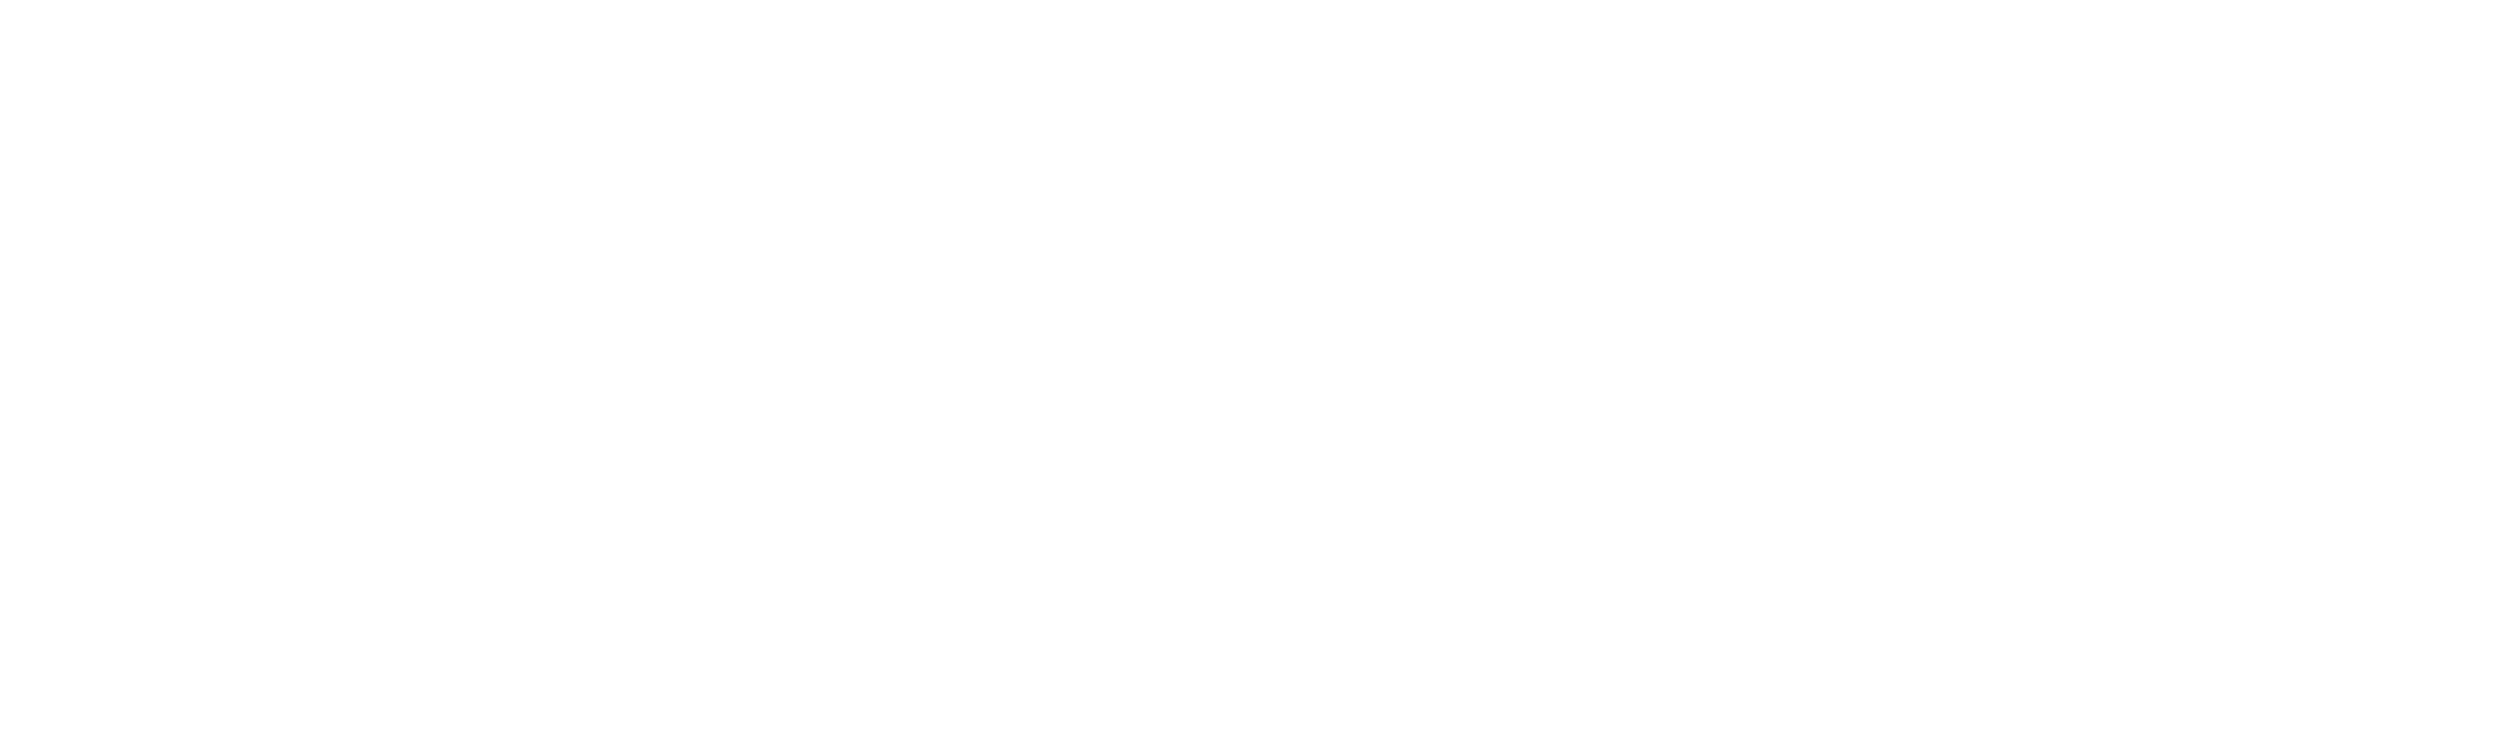 Airsoft Bazaar